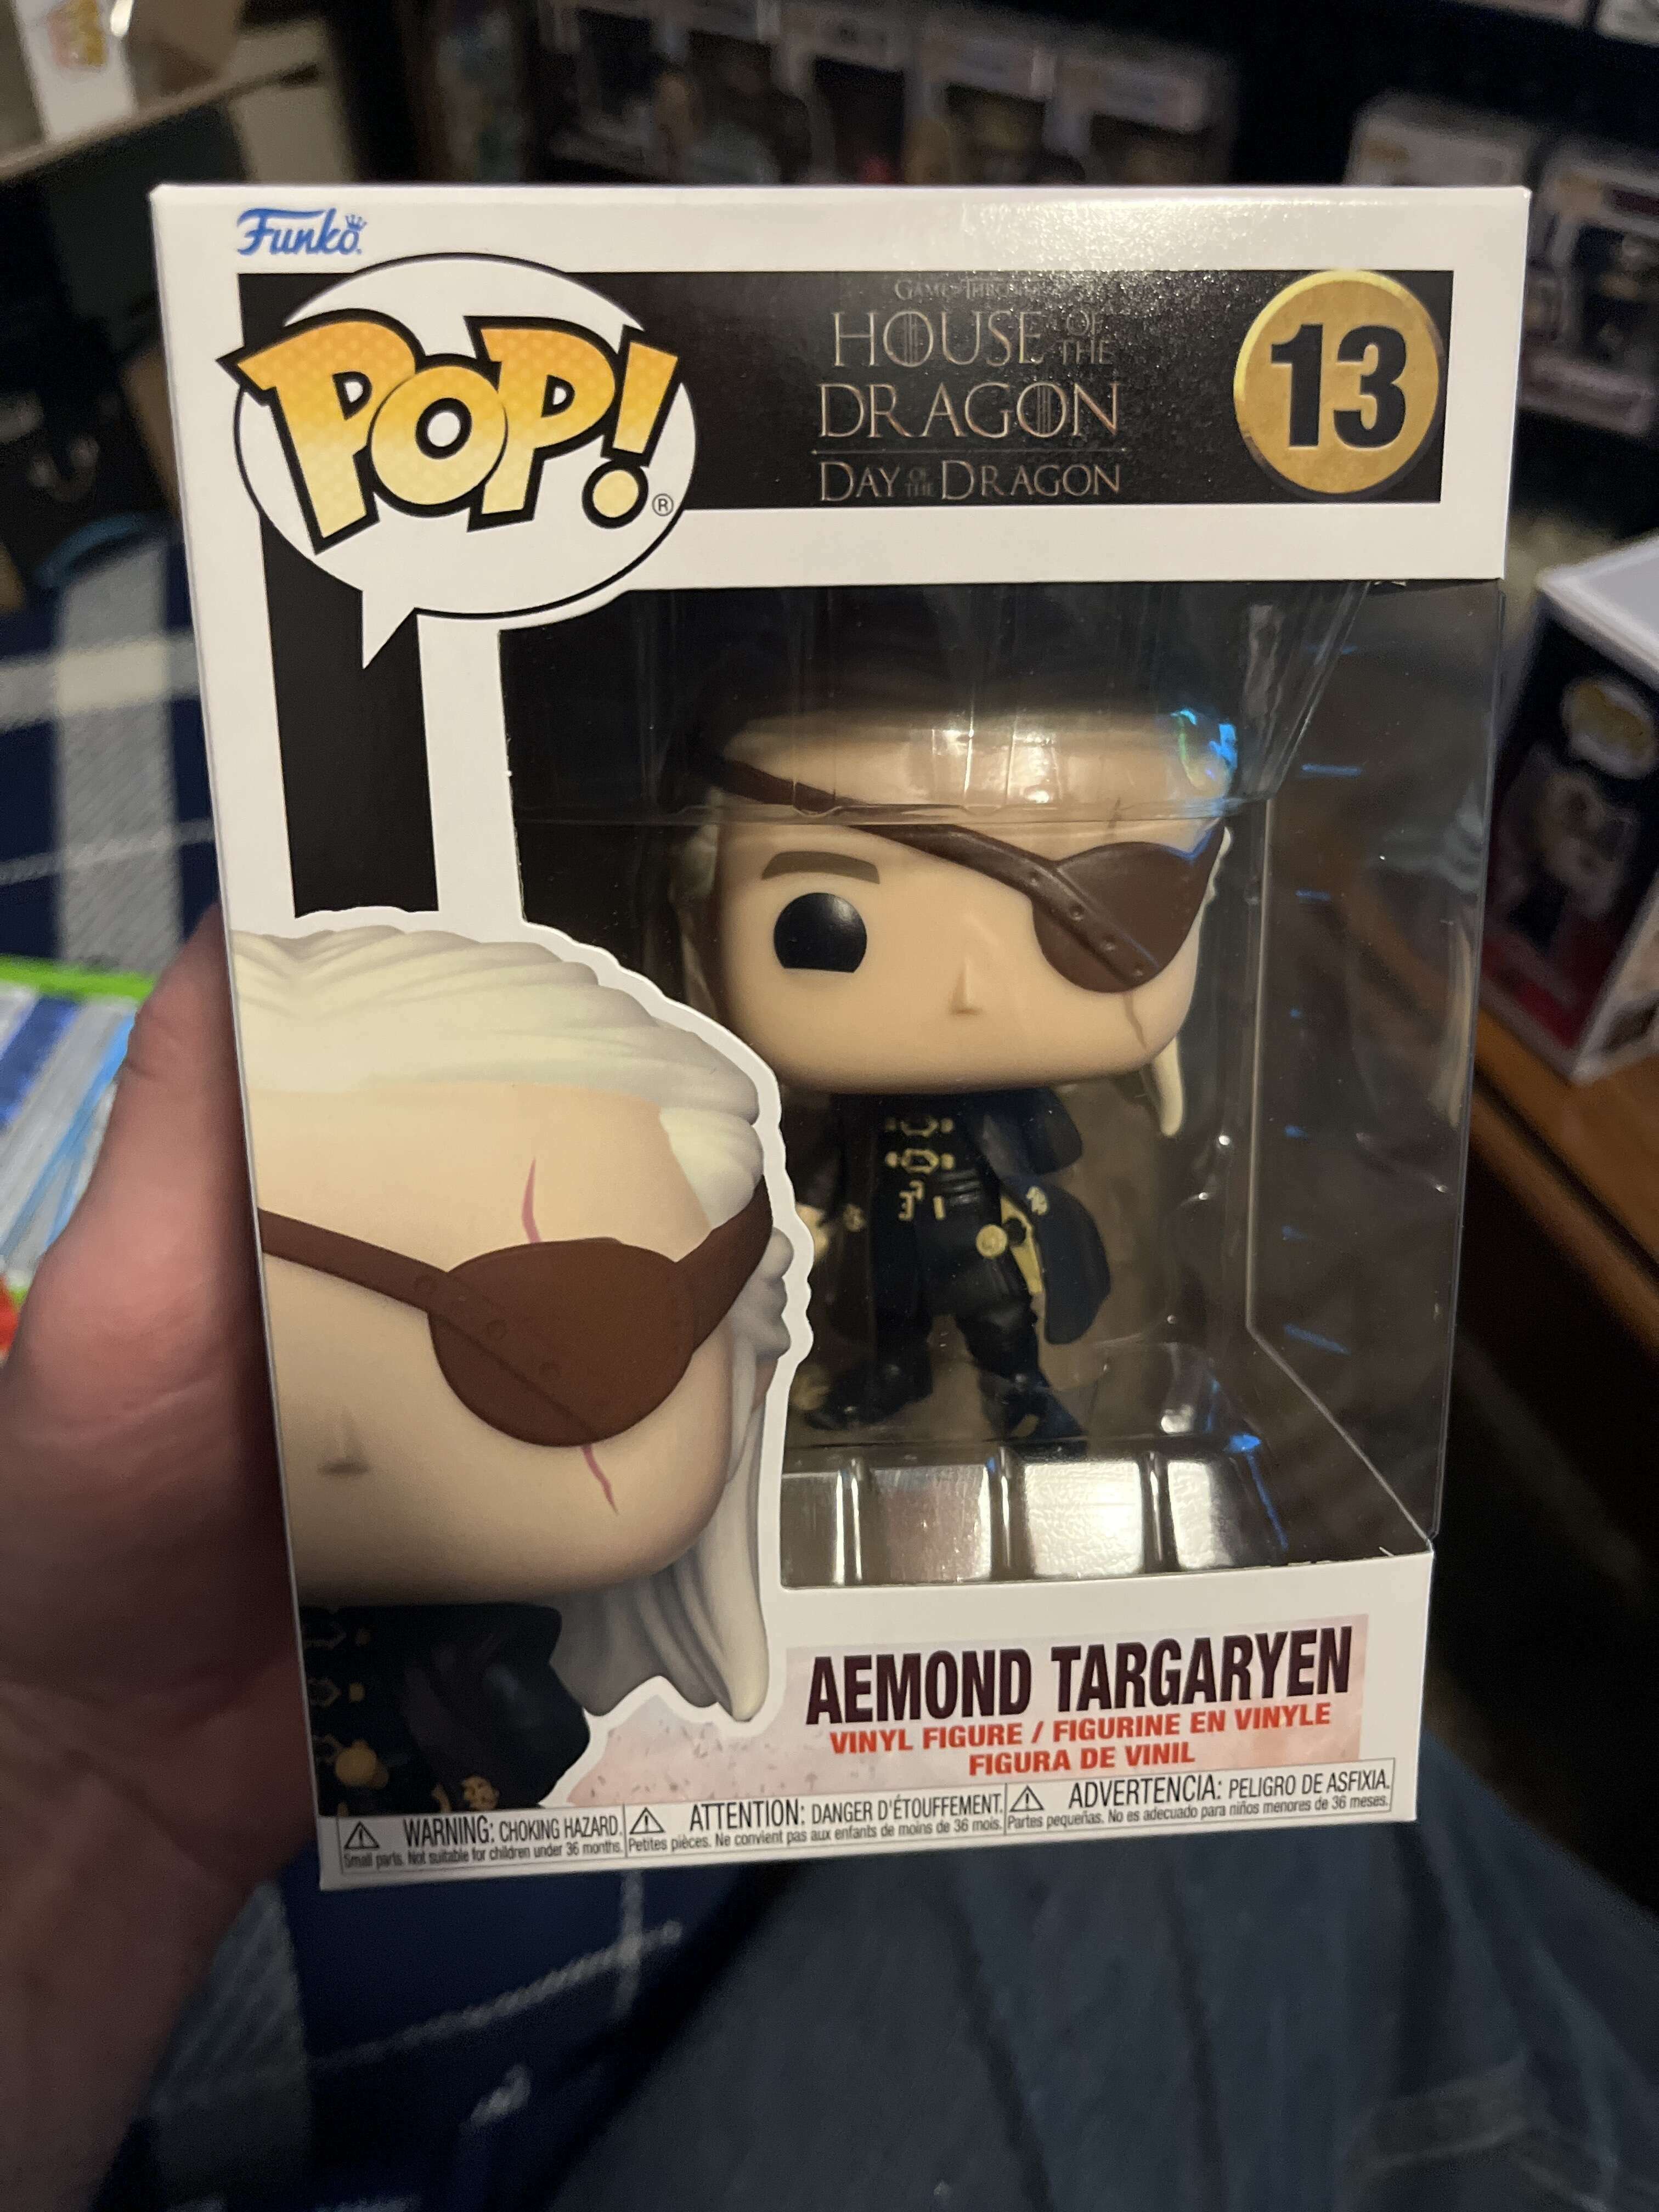 Buy Pop! Aemond Targaryen at Funko.